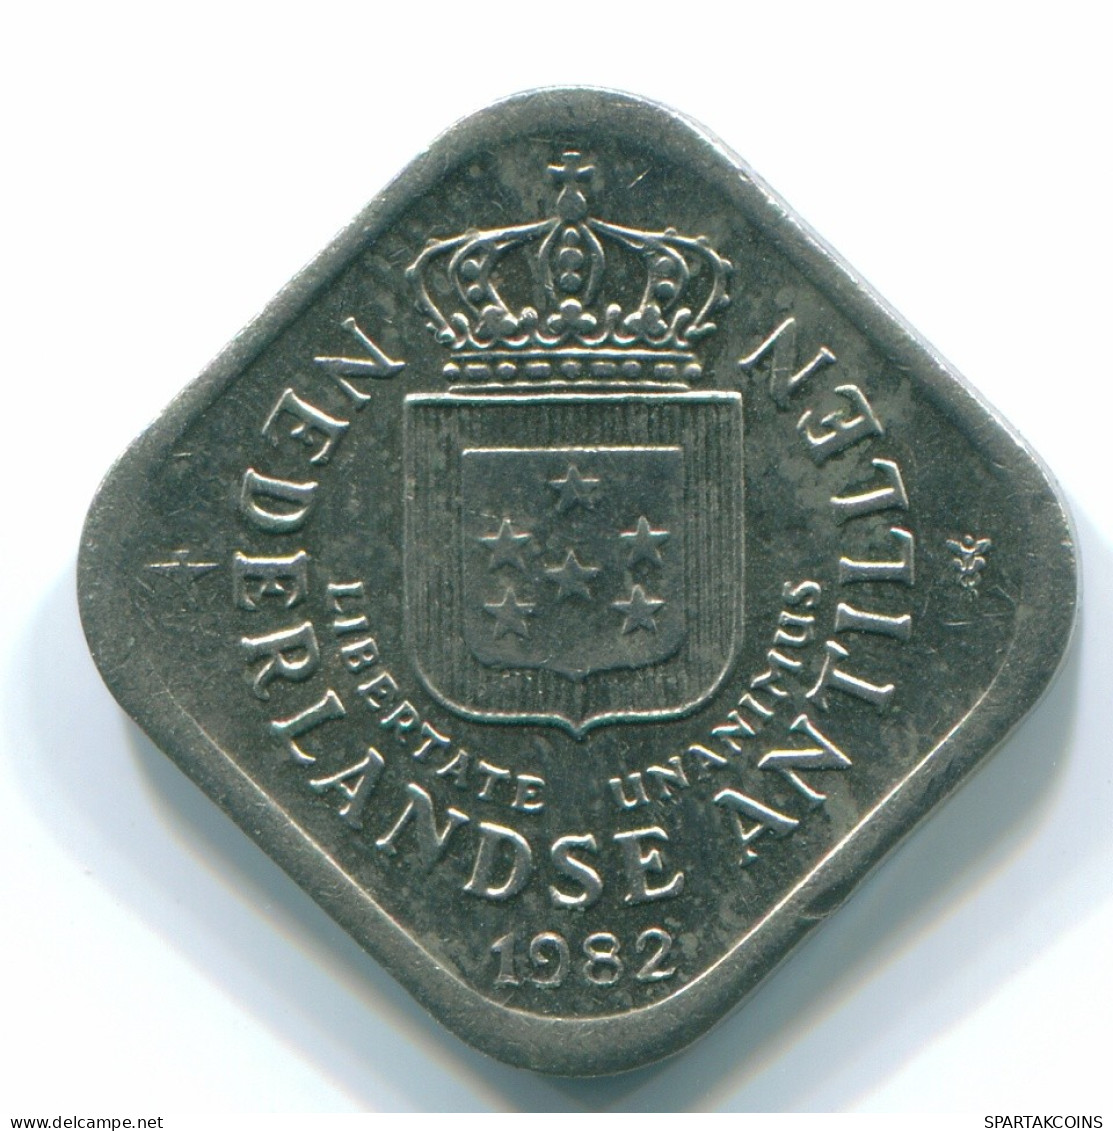 5 CENTS 1982 NIEDERLÄNDISCHE ANTILLEN Nickel Koloniale Münze #S12353.D.A - Netherlands Antilles